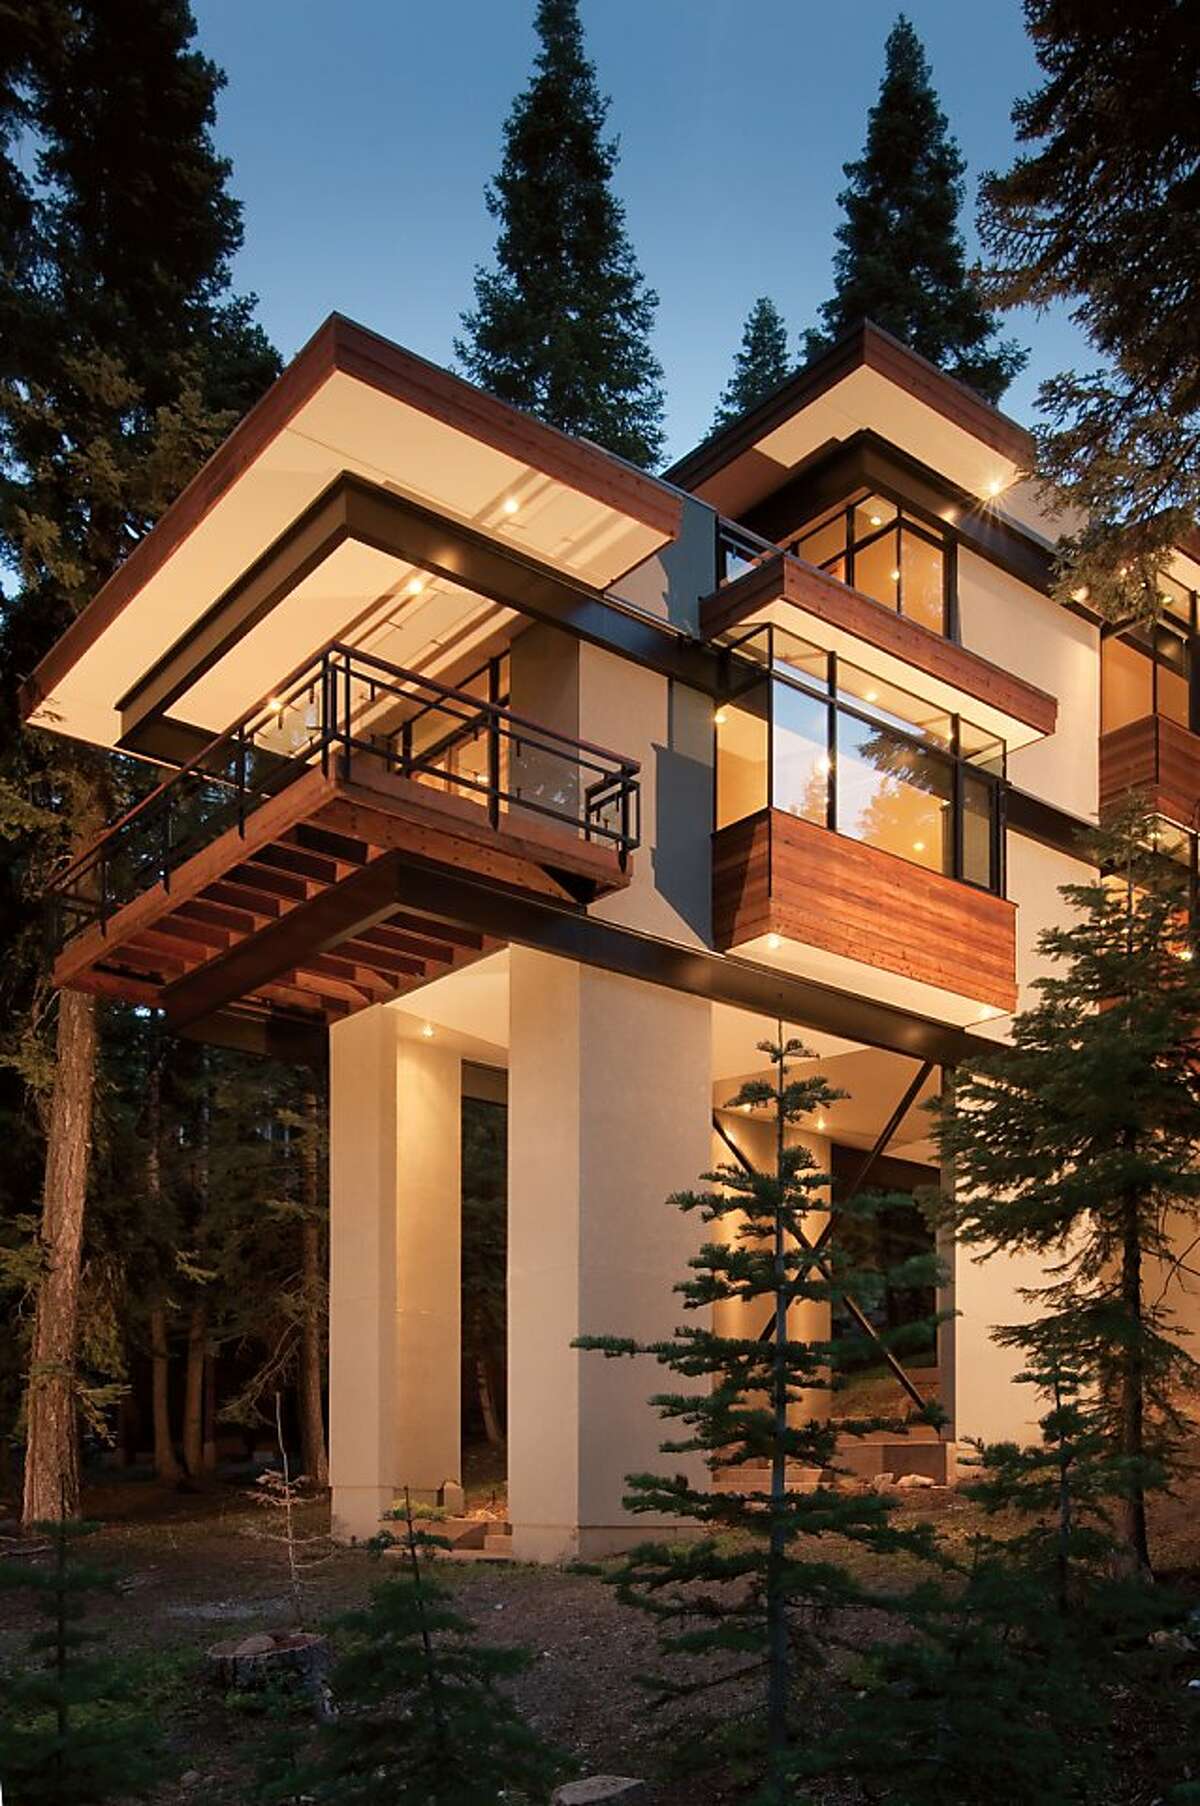 "Stal Tre Hus Residence" (Norwegian for “Steel Tree House”) in Tahoe Donner, CA.